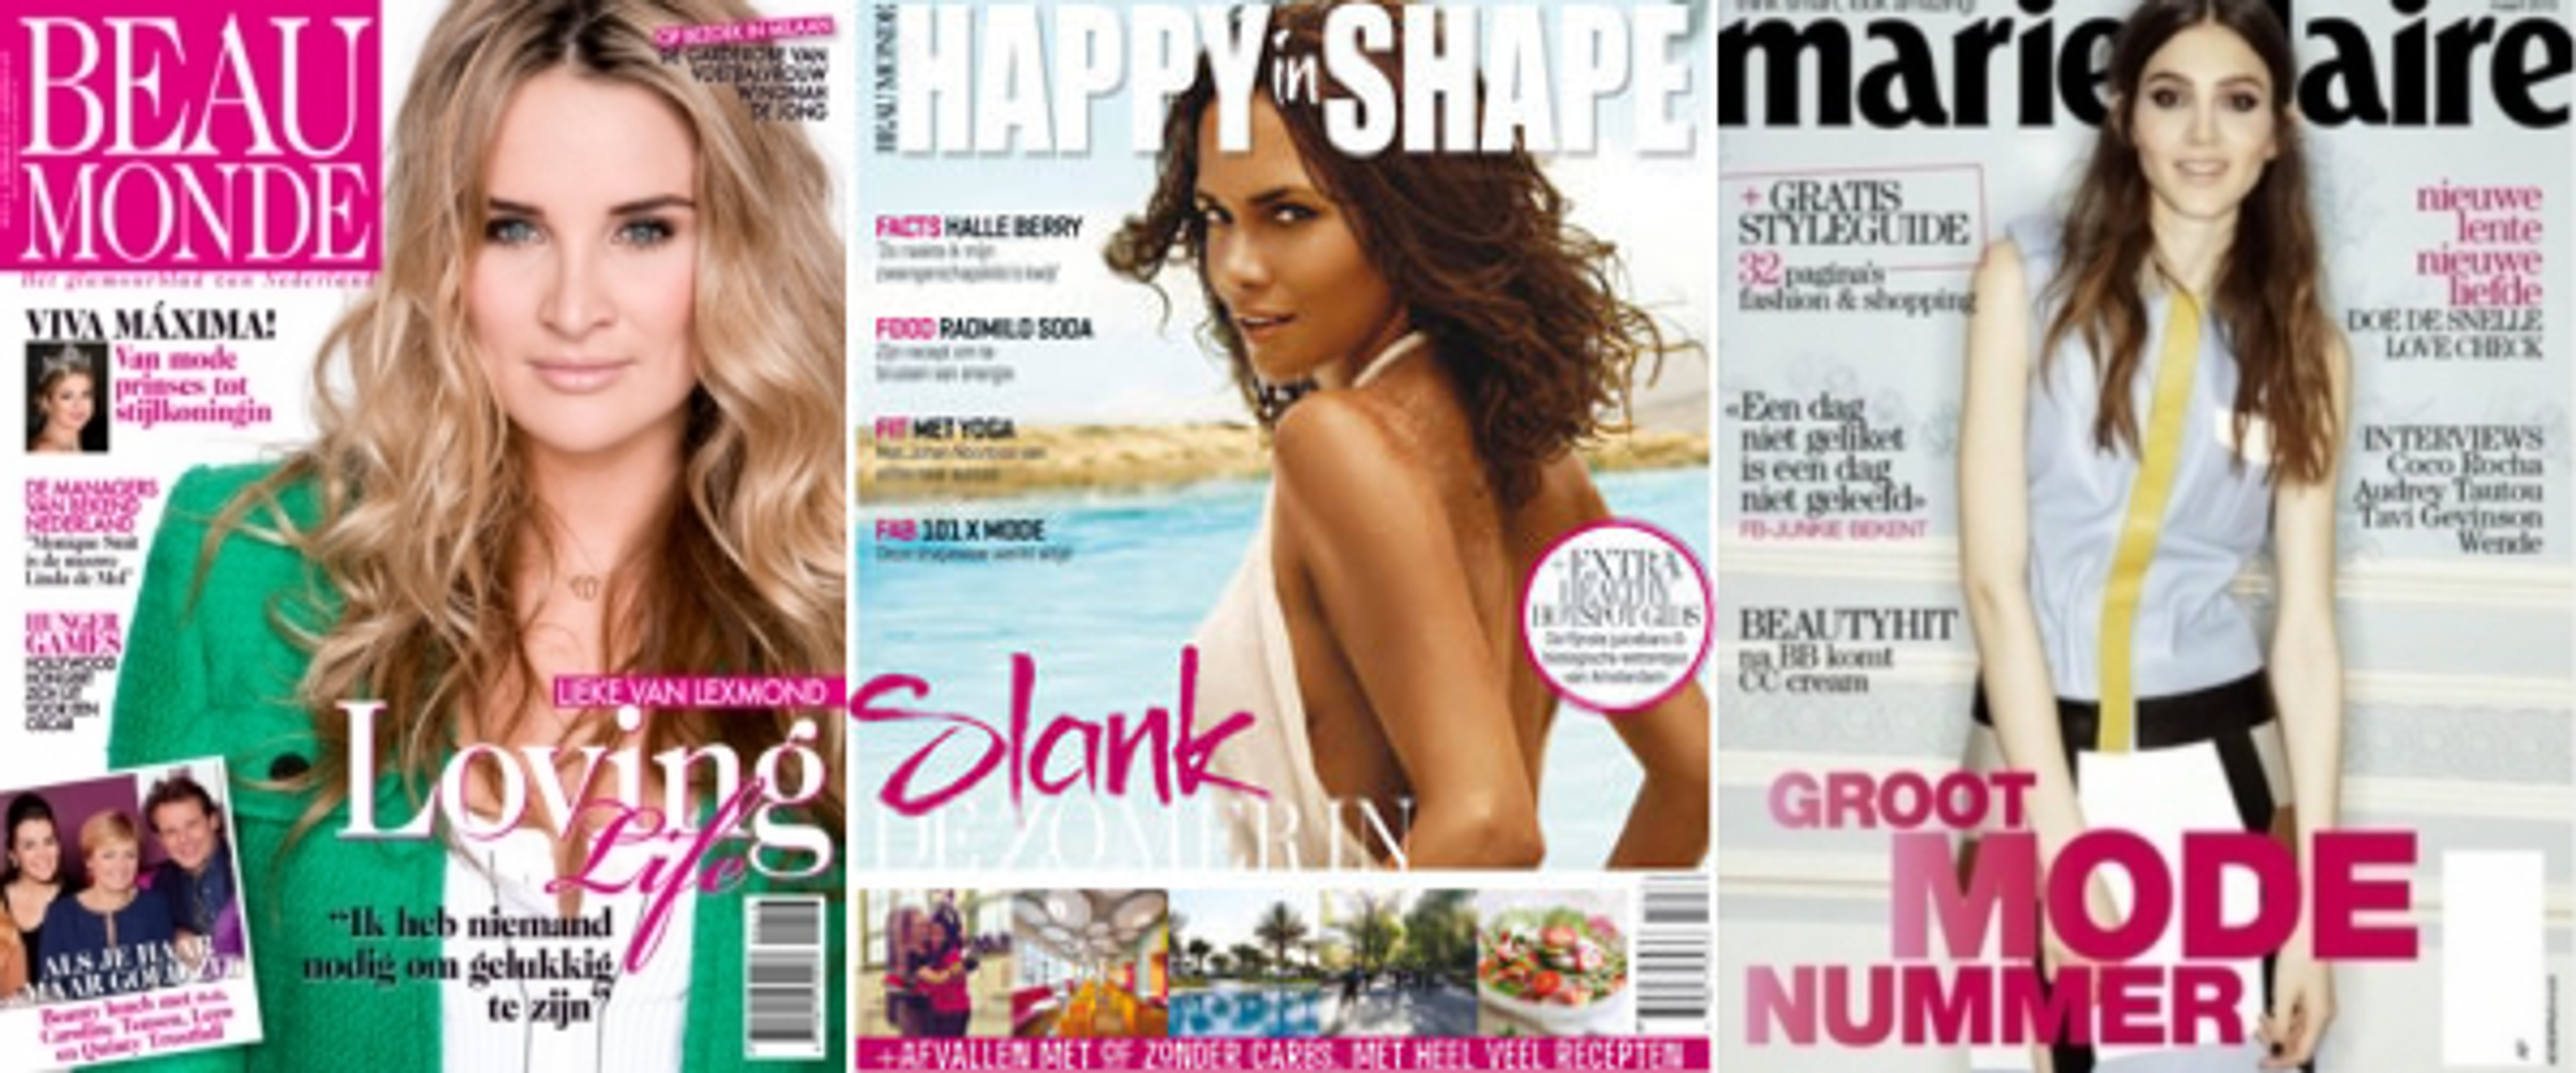 Marie Claire, Beau Monde en Happy in Shape naar Pijper Media BV